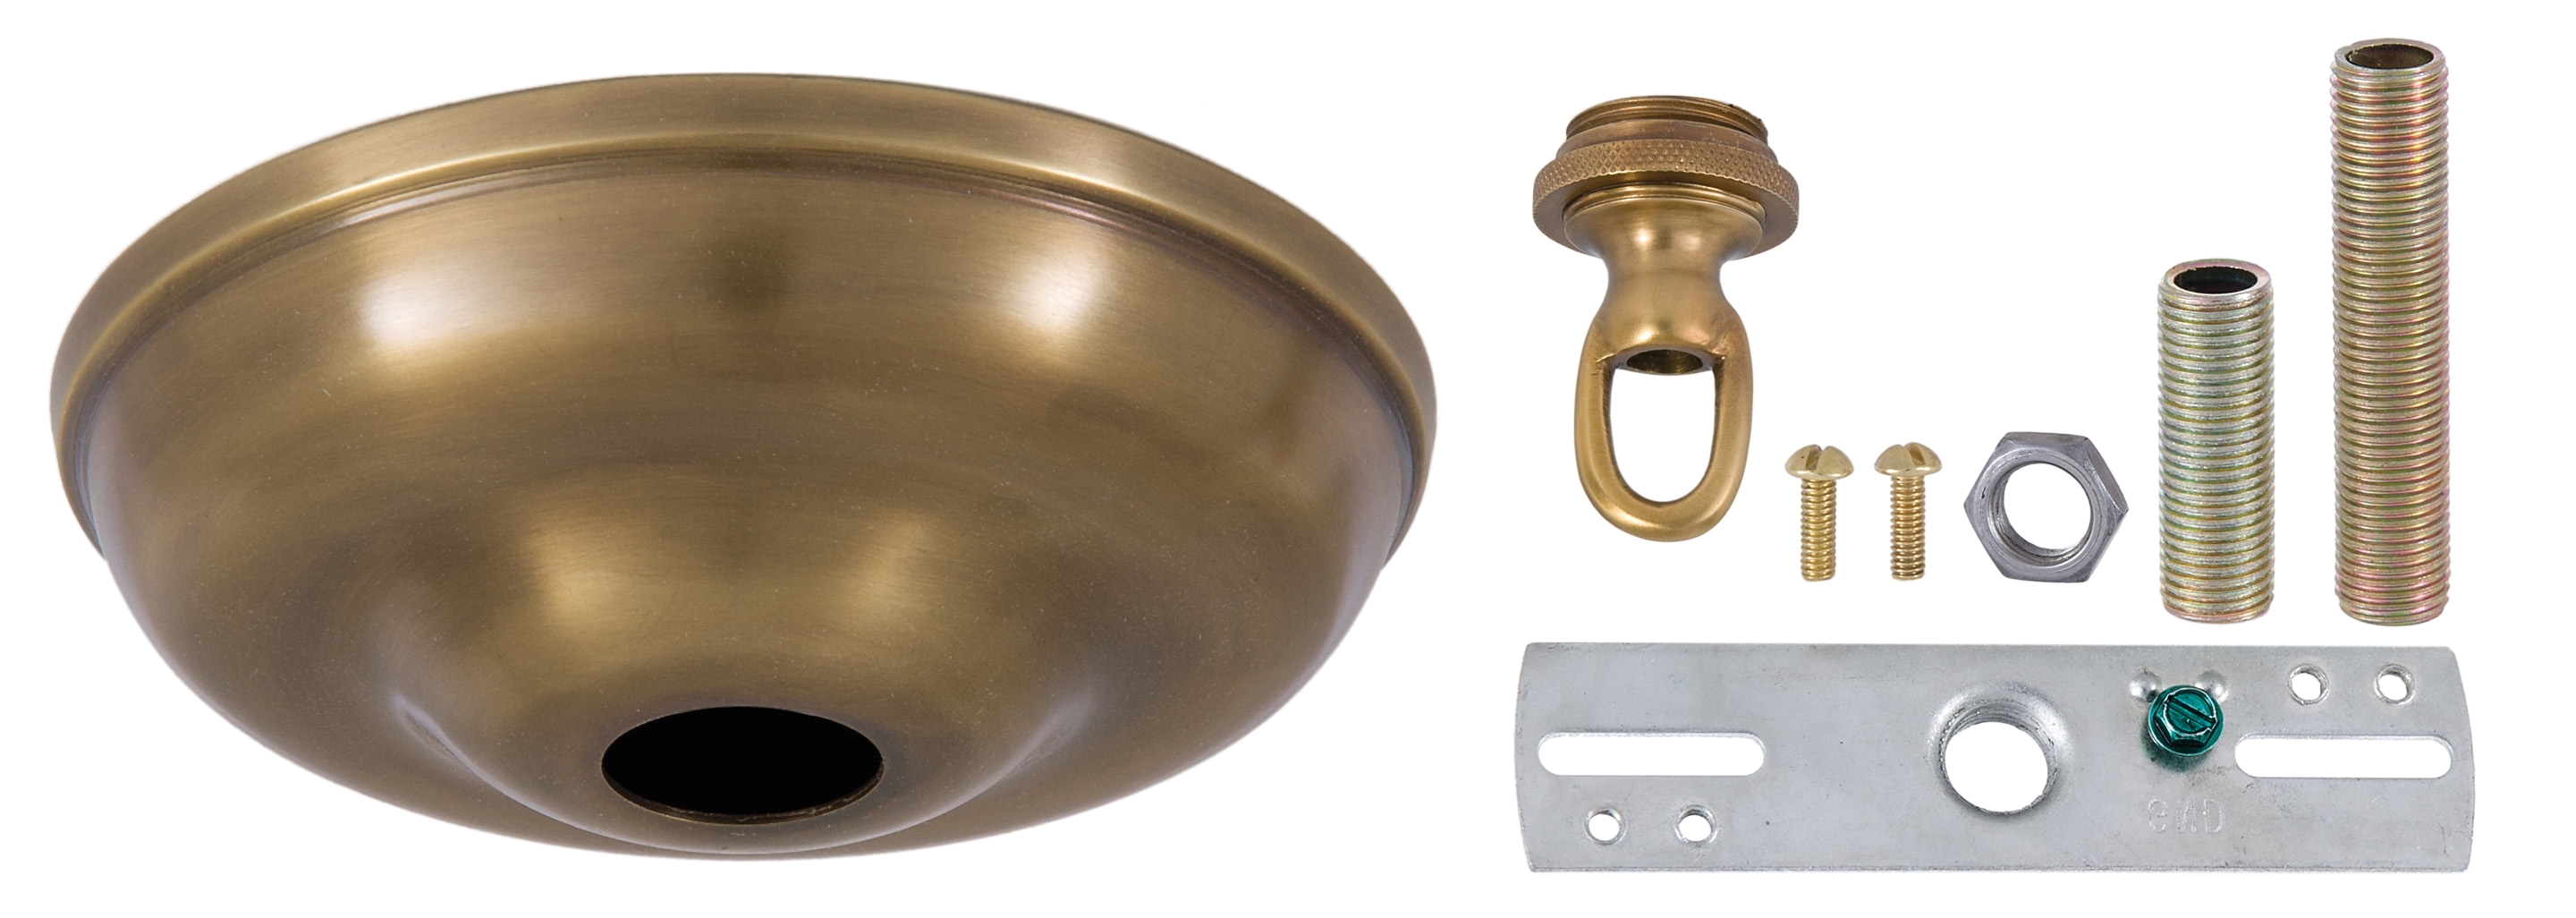 10803a 5 1 2 inch antique brass round canopy